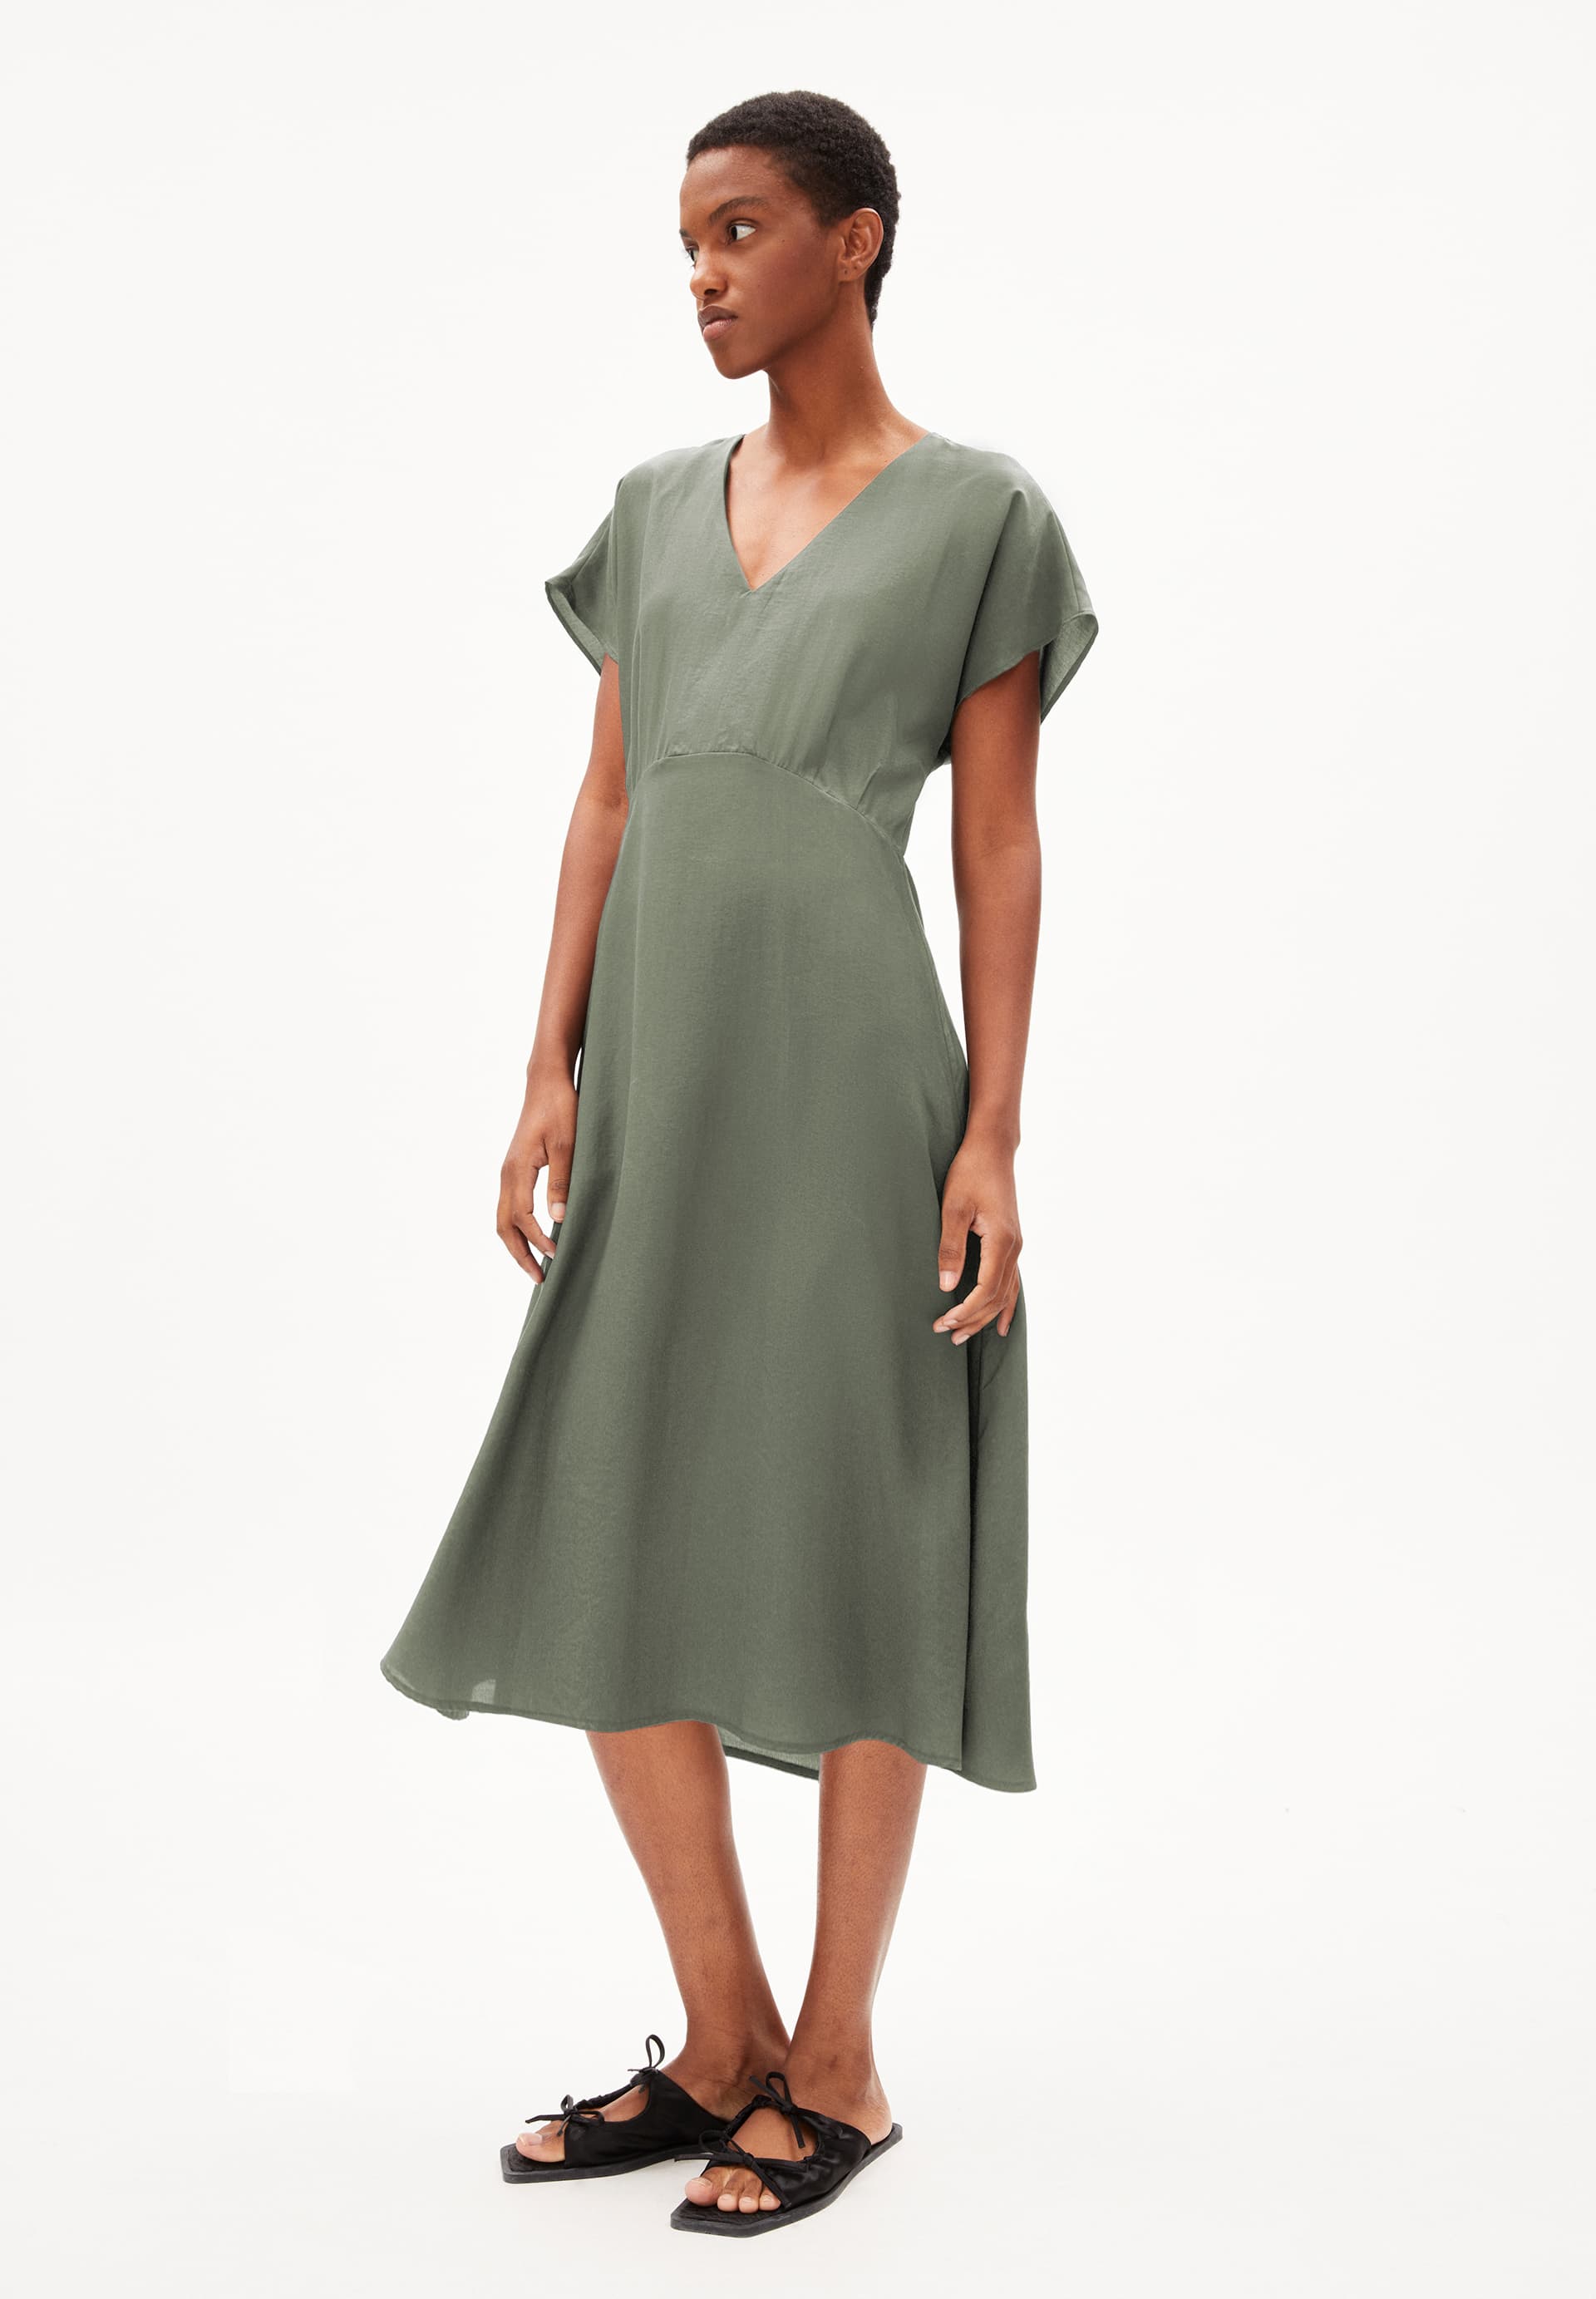 AALBINE Woven Dress Regular Fit made of TENCEL™ Lyocell Mix